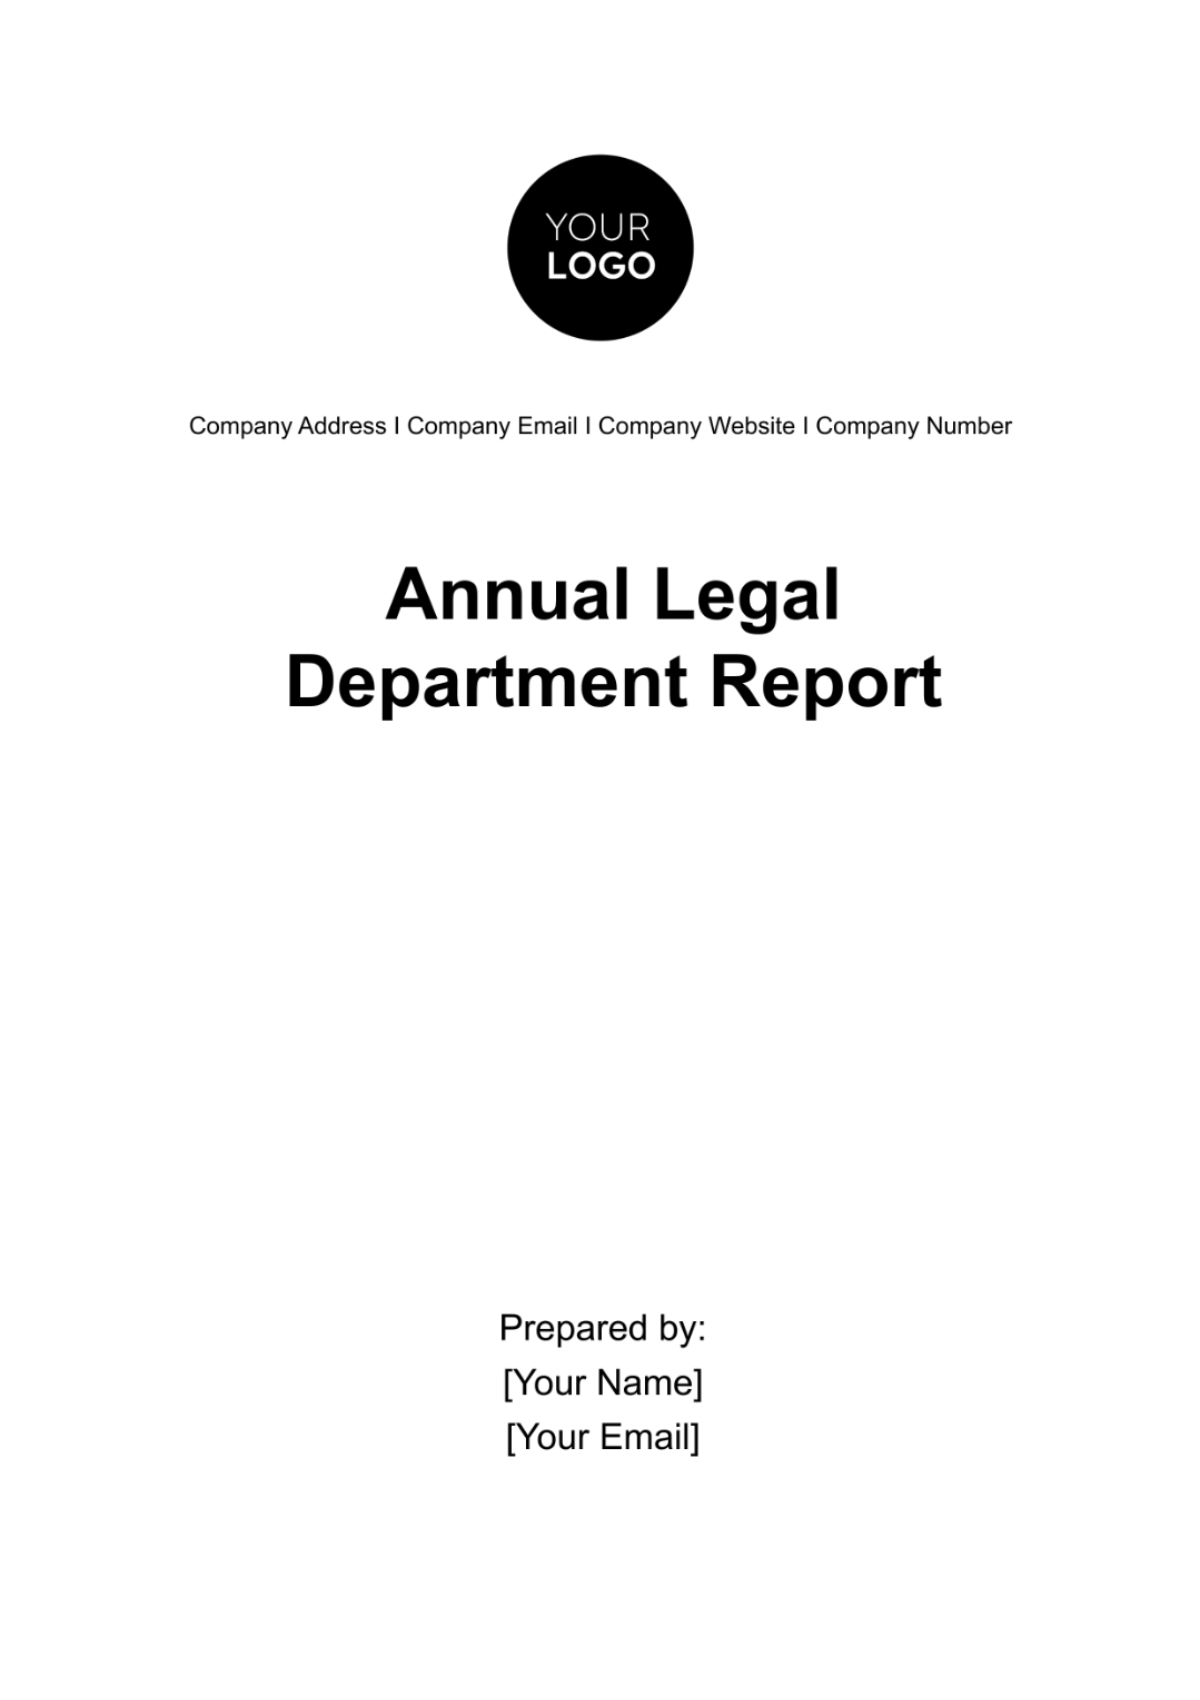 Annual Legal Department Report Template